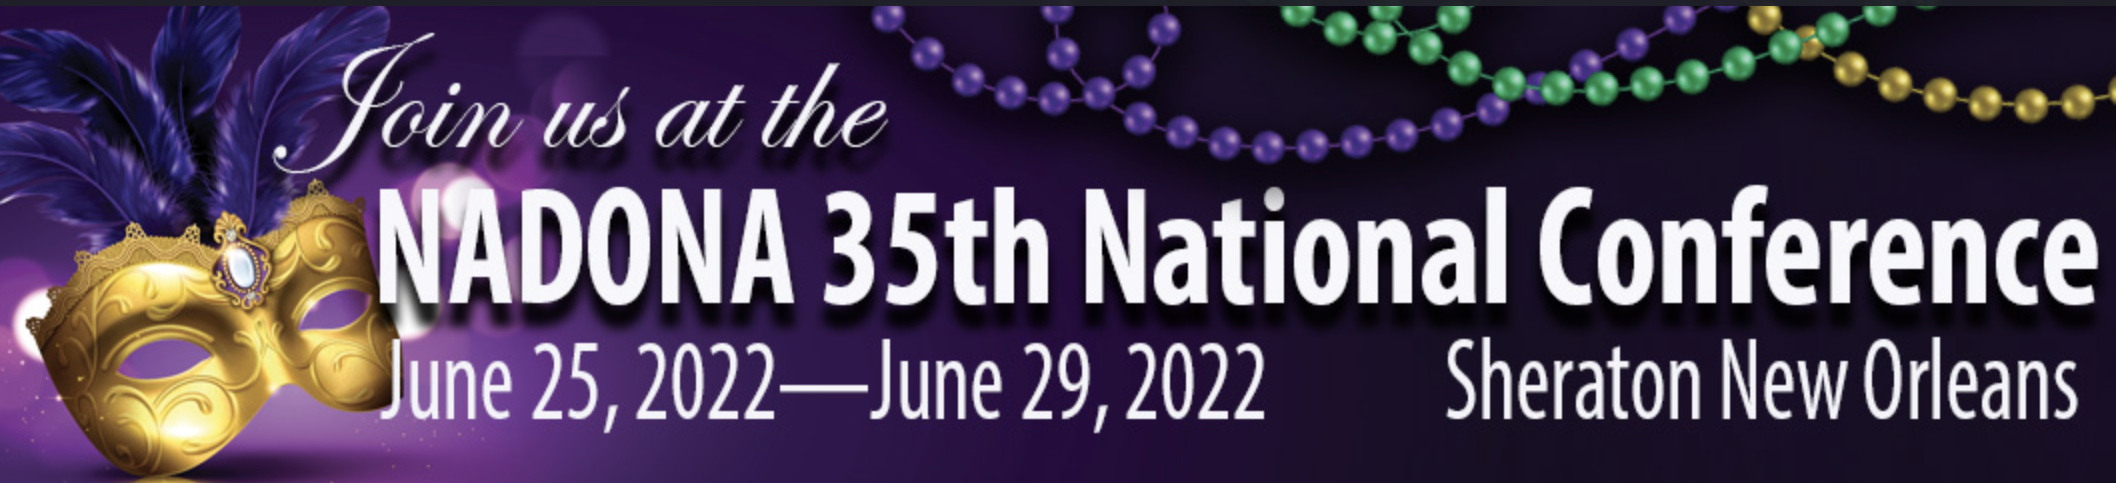 nadona-35th-national-conference